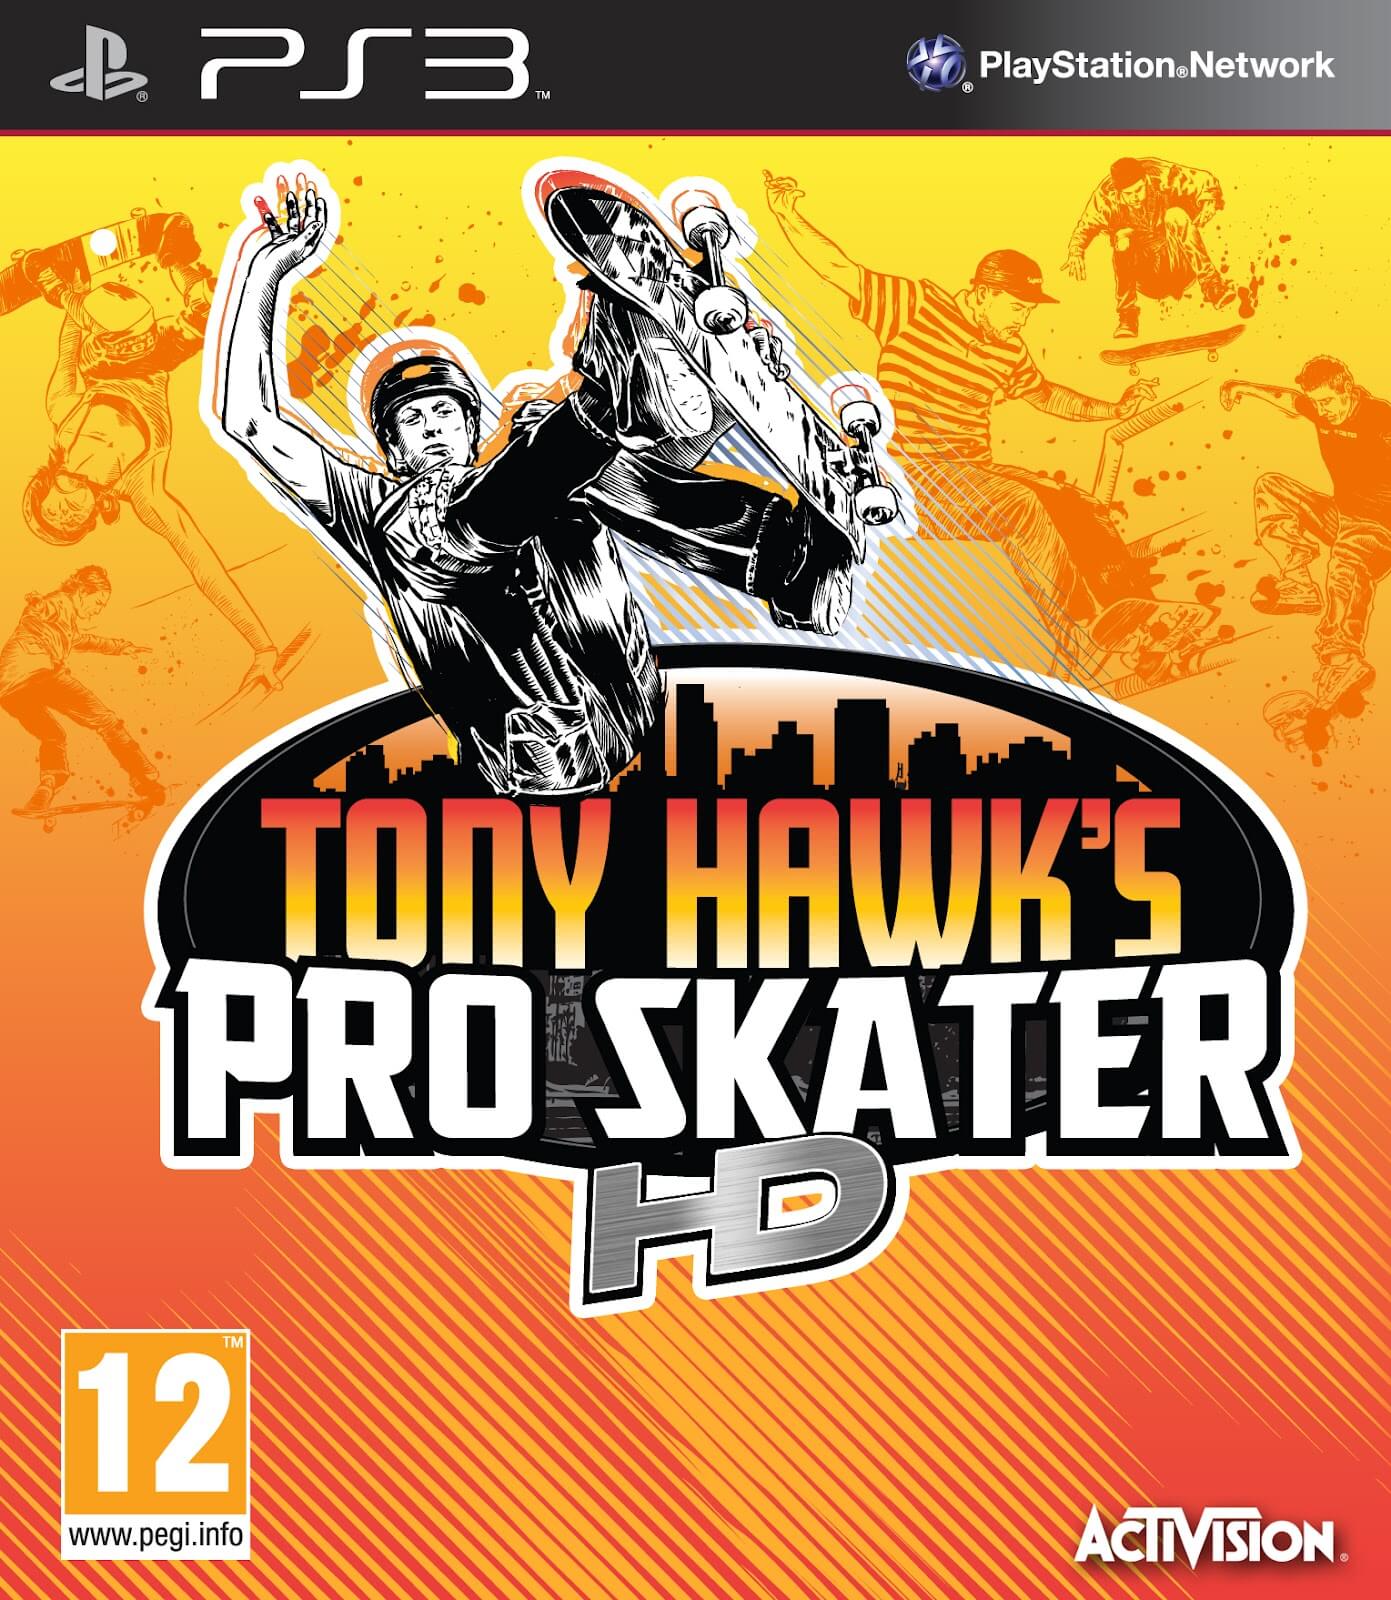 Tony Hawk's Pro Skater ROM (ISO) Download for Sony Playstation